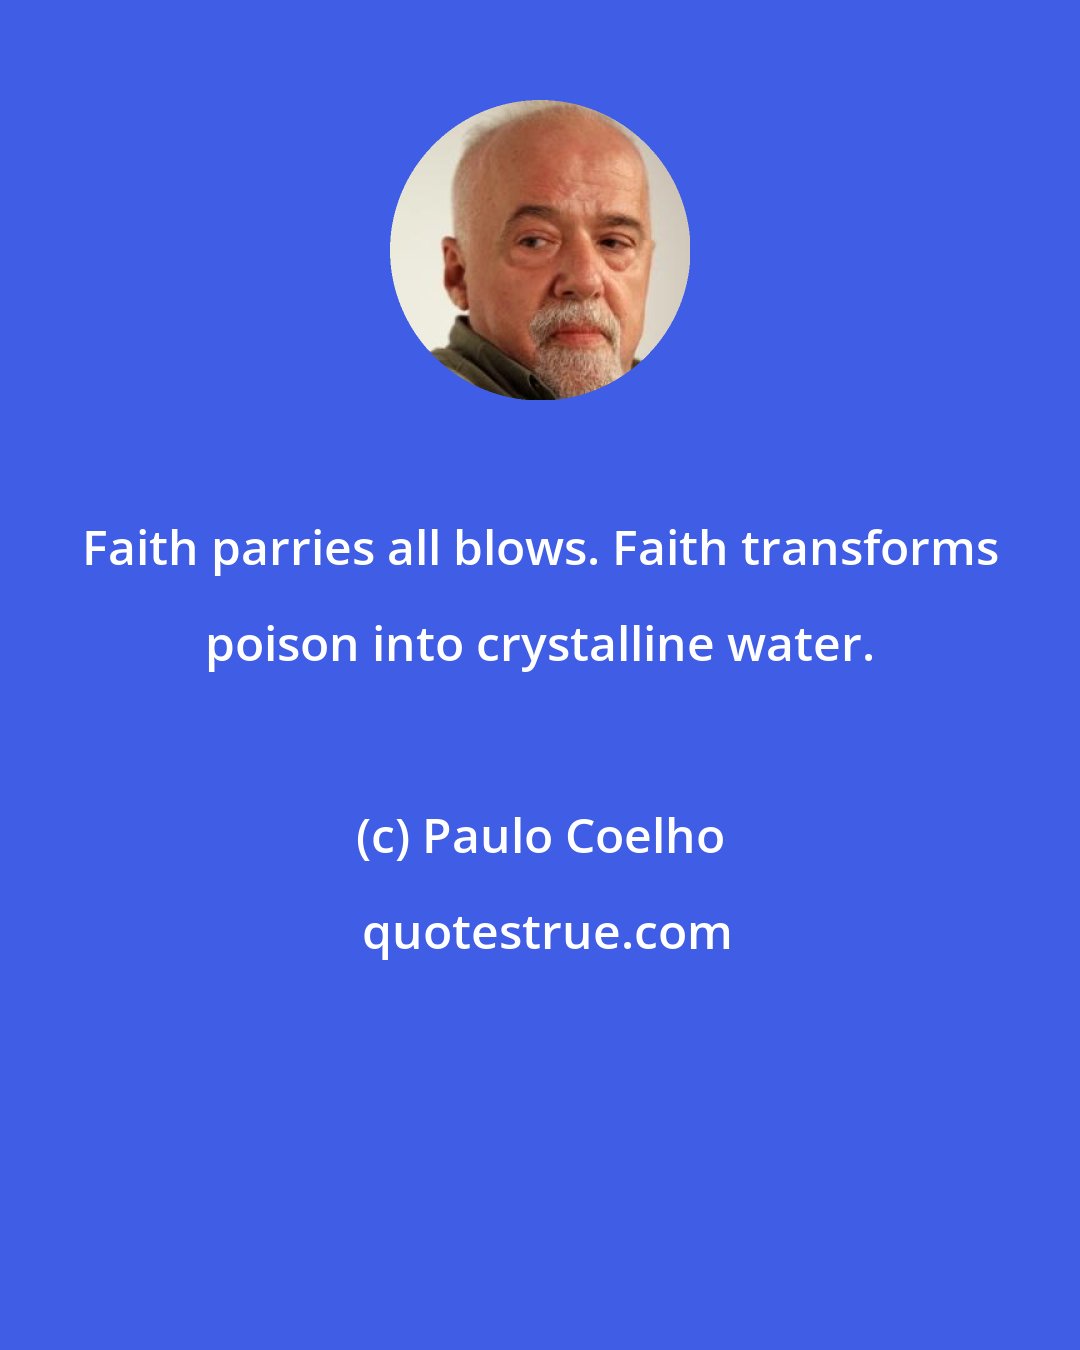 Paulo Coelho: Faith parries all blows. Faith transforms poison into crystalline water.